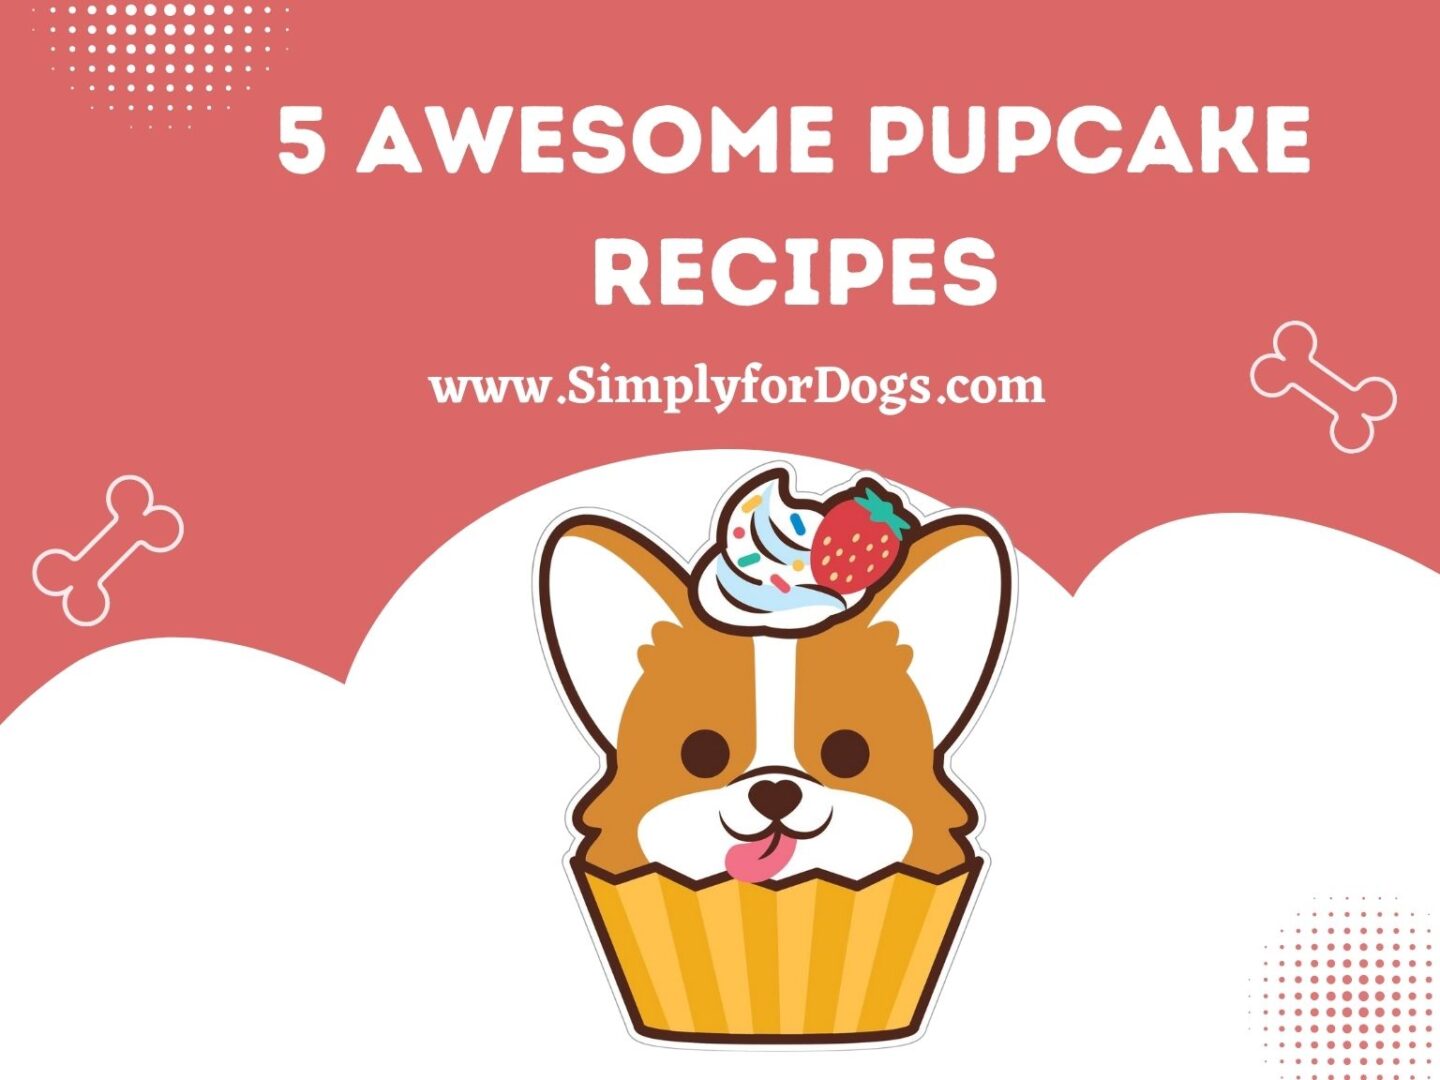 5 Awesome Pupcake Recipes